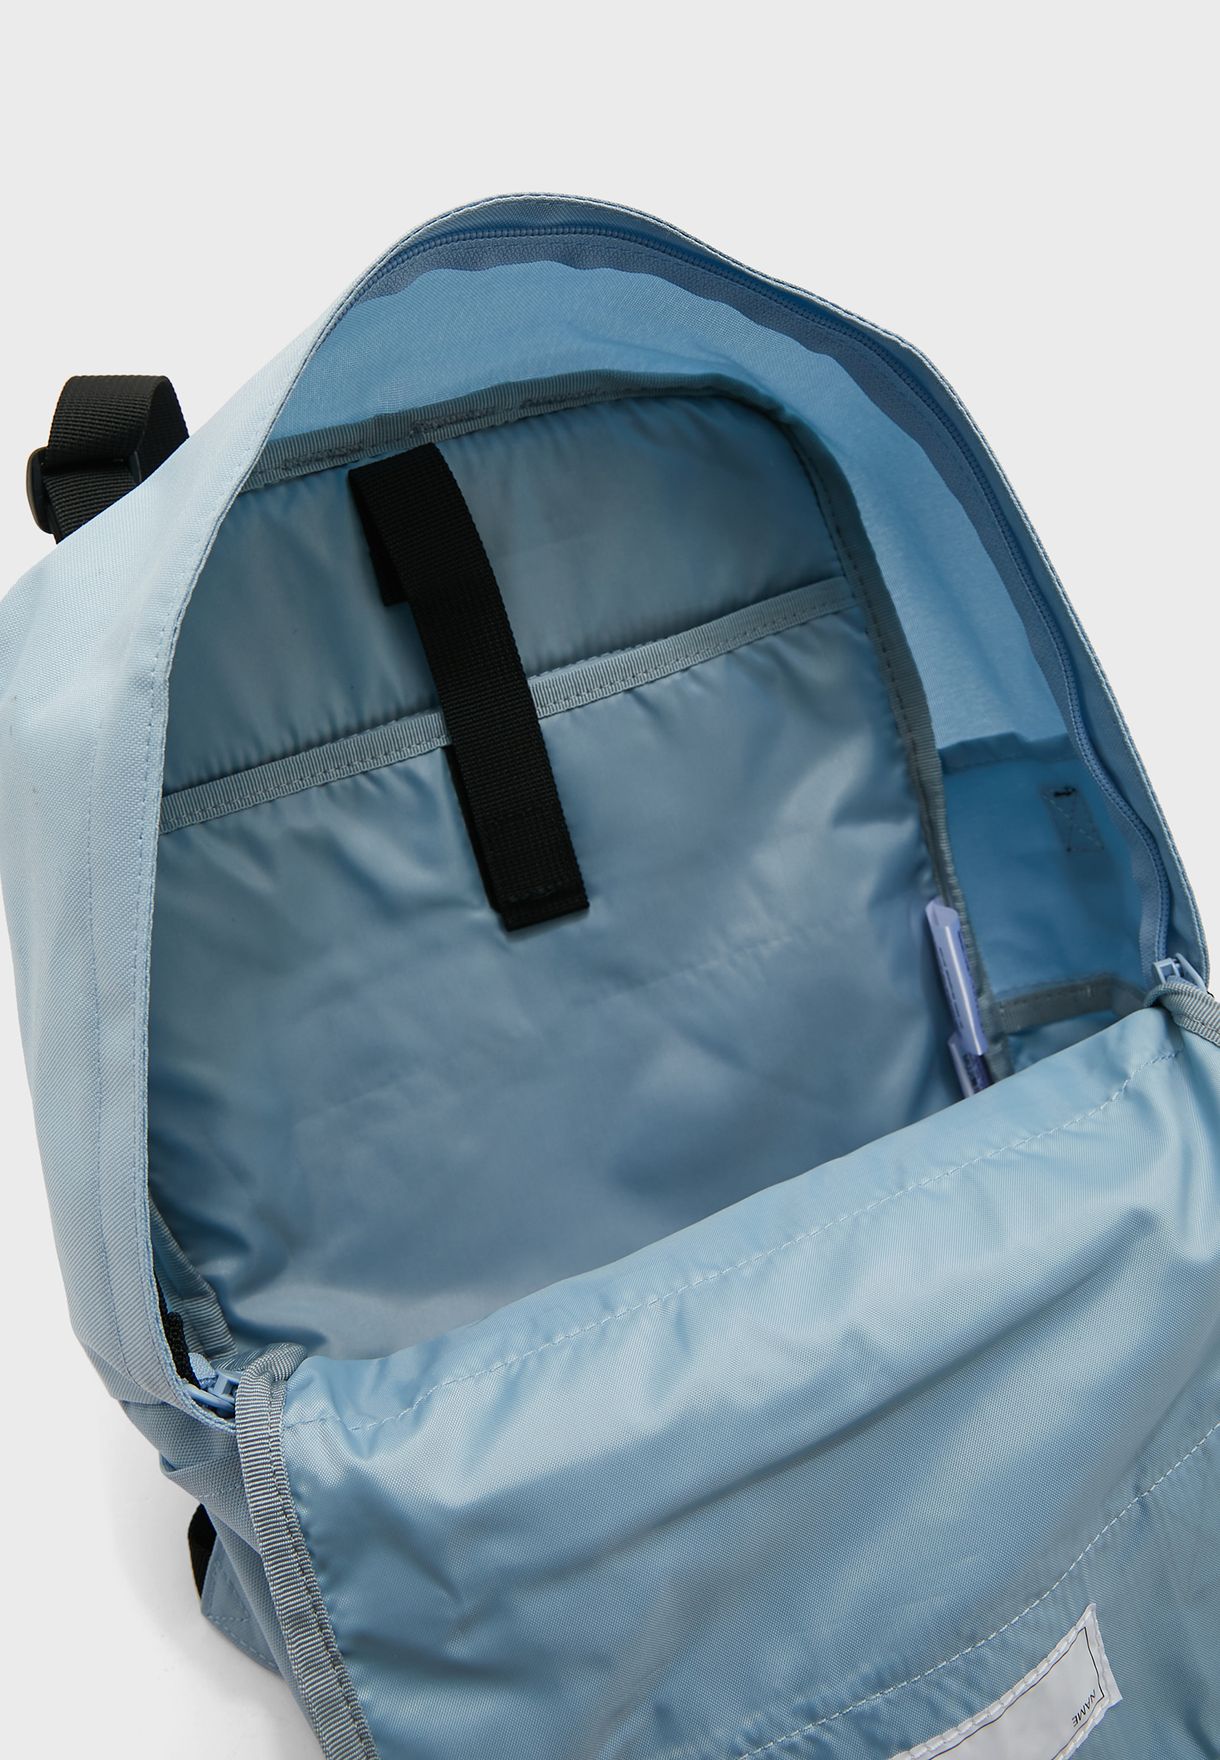 Kids Adjustable Handle Backpack